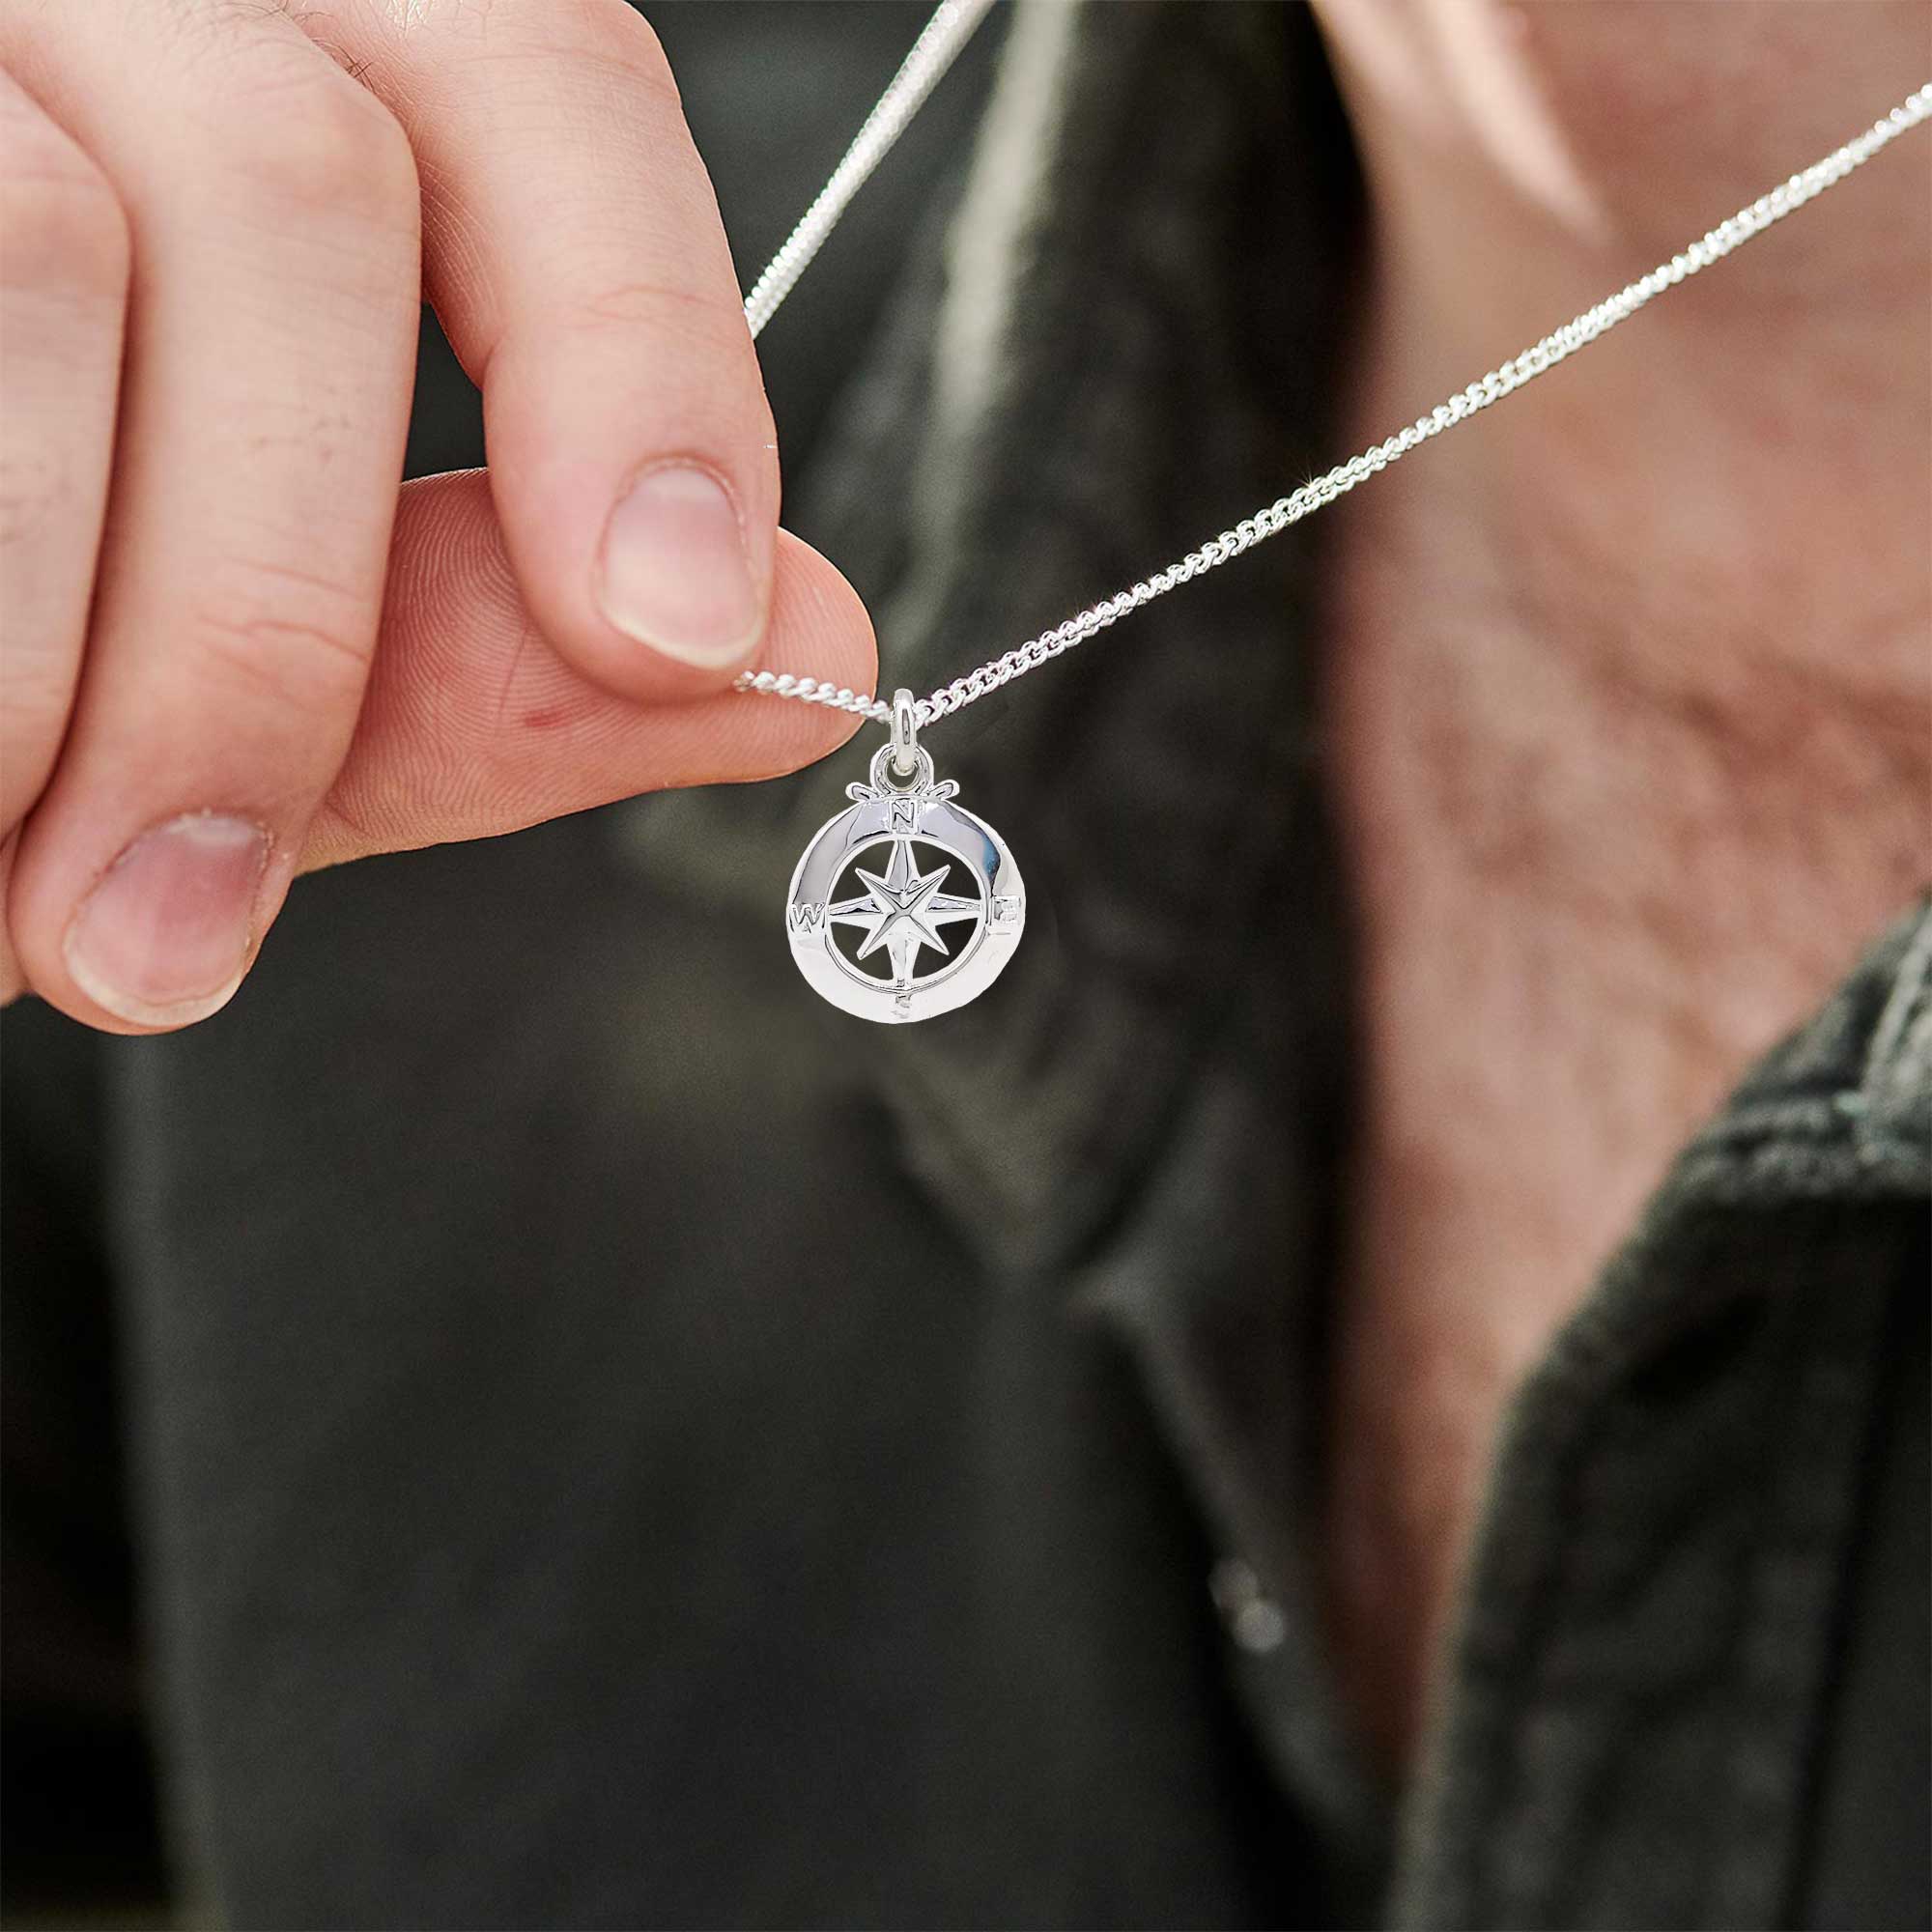 Enamel compass necklace for women travel alternative saint christopher pendant gift